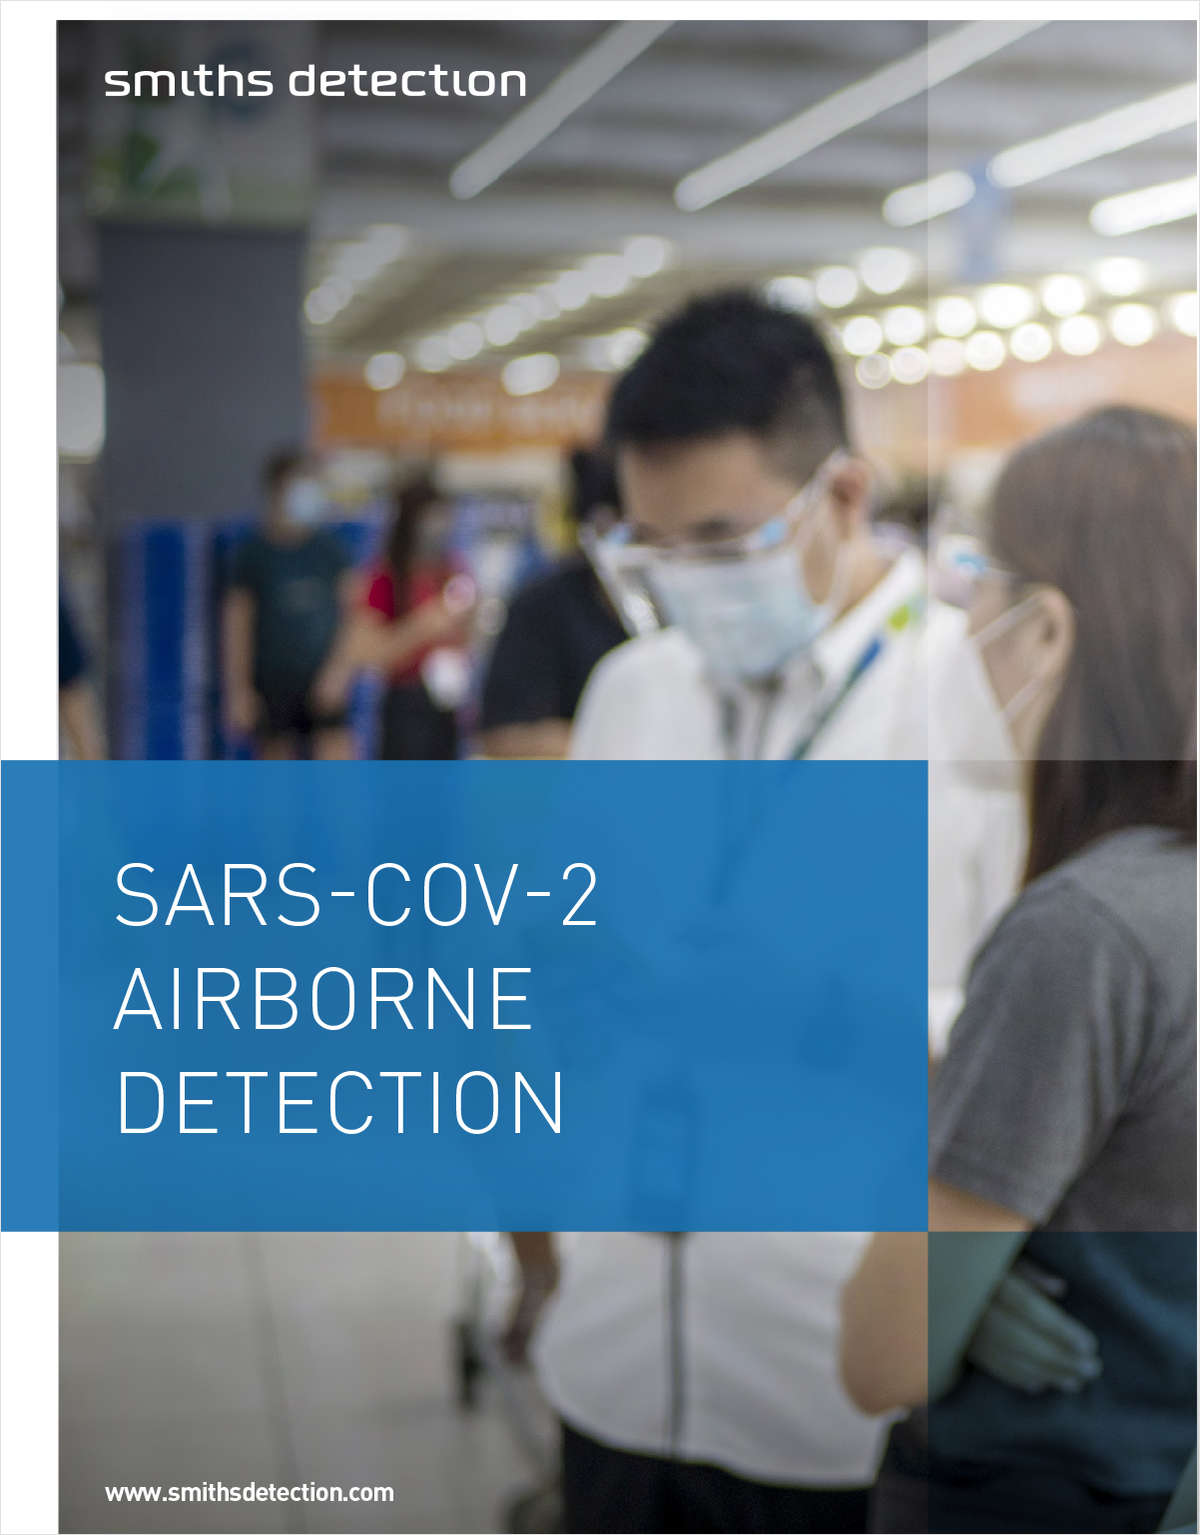 SARS-COV-2 Airborne Detection to Help Stop Virus Spread